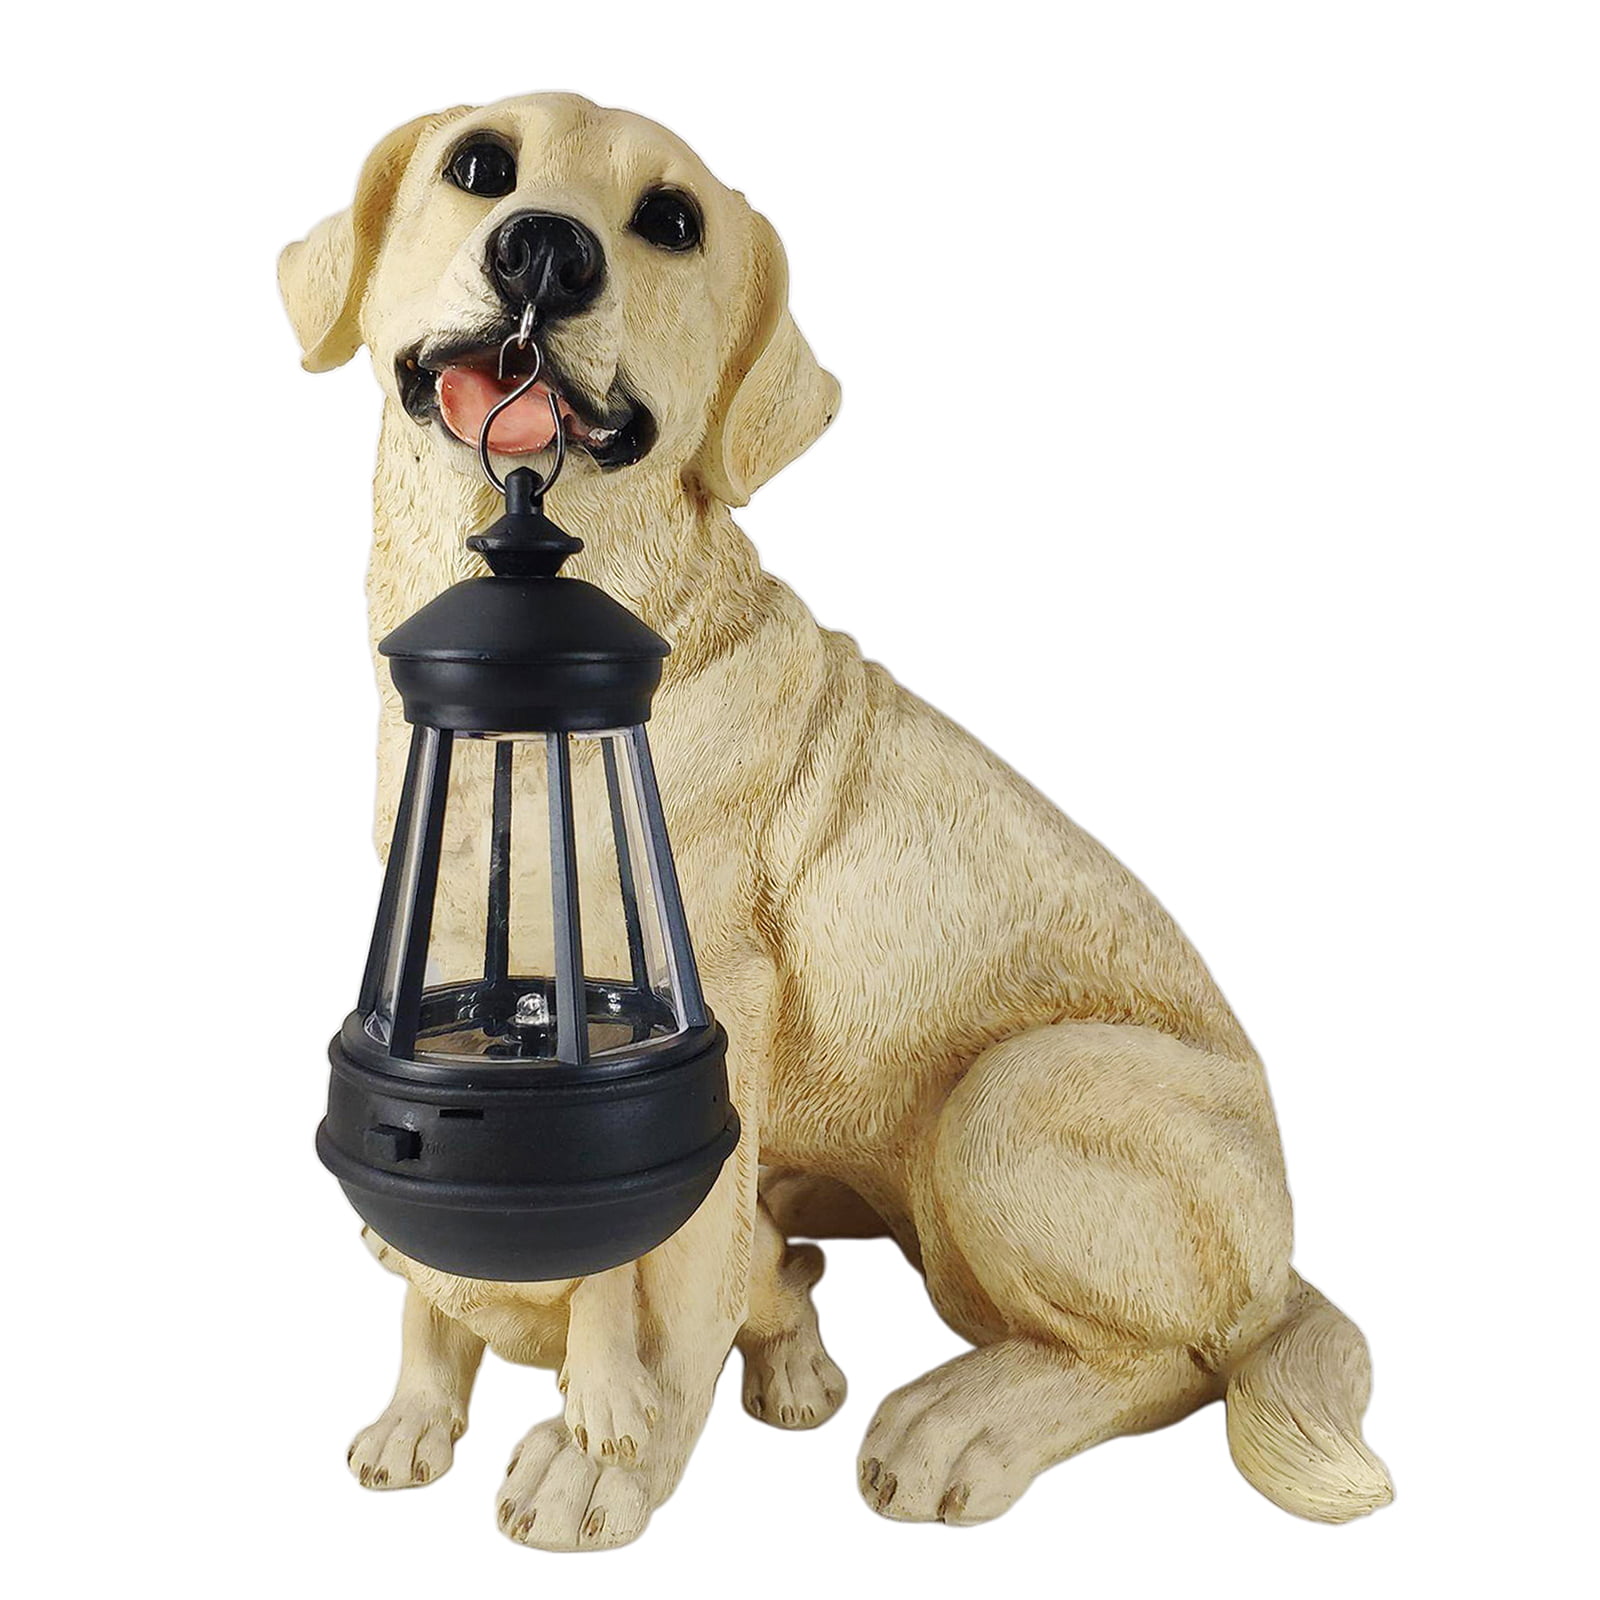 Boy child yellow lab dog puppy outdoor statue lantern LED path SOLAR light lamp 